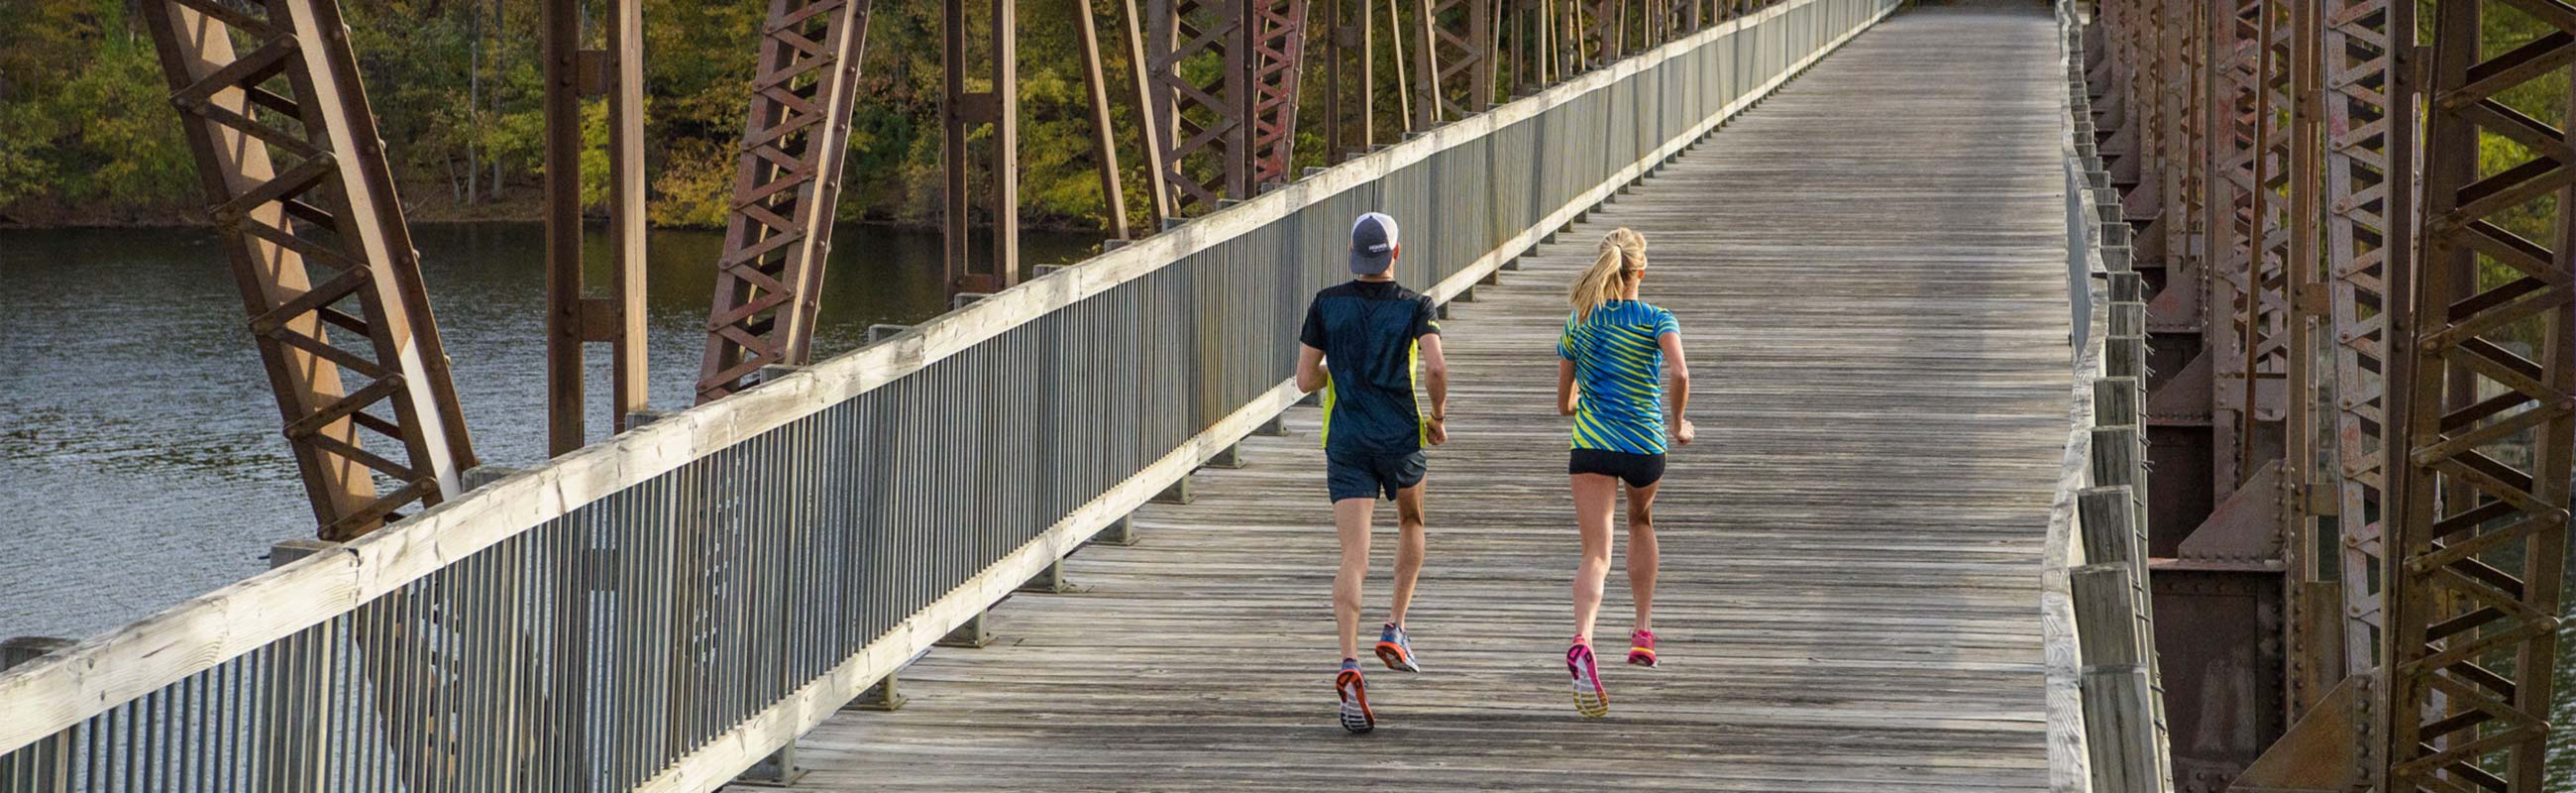 Man and woman running across a bridge wearing Hoka One One running shoes.